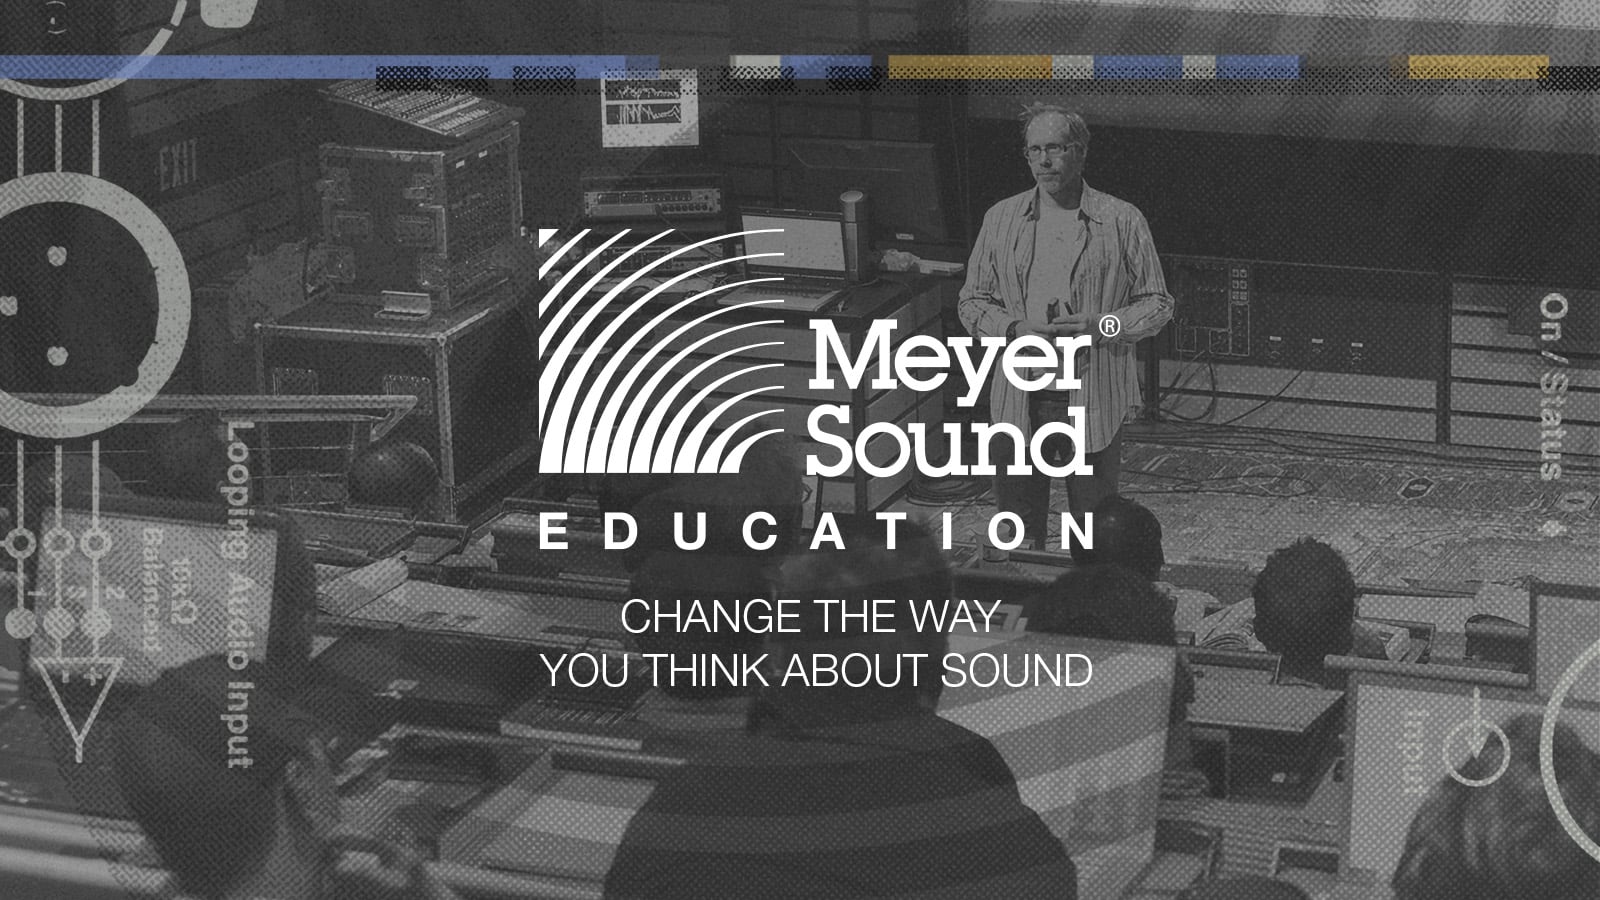 Meyer Sound Reimagines and Expands Global Education Program